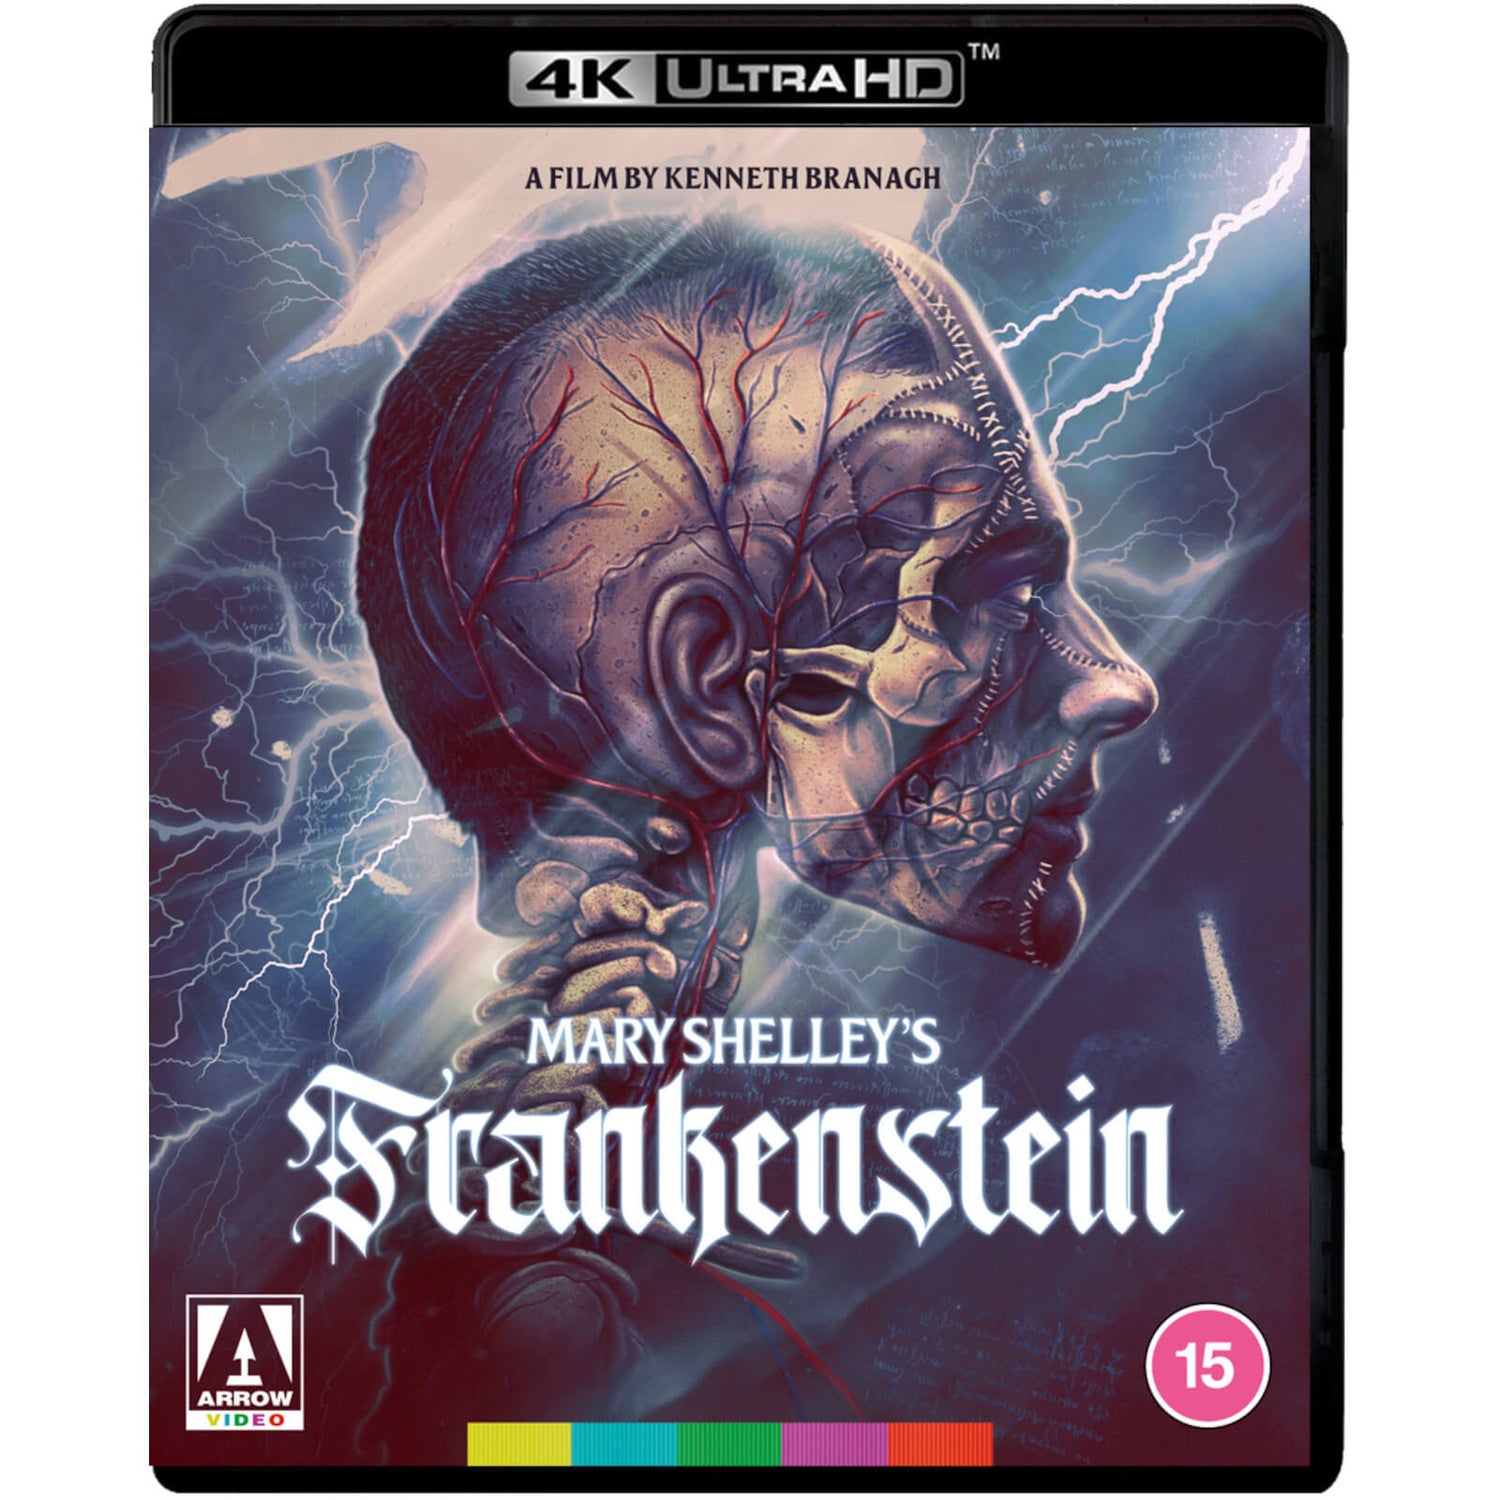 Mary Shelley's Frankenstein 4K UHD